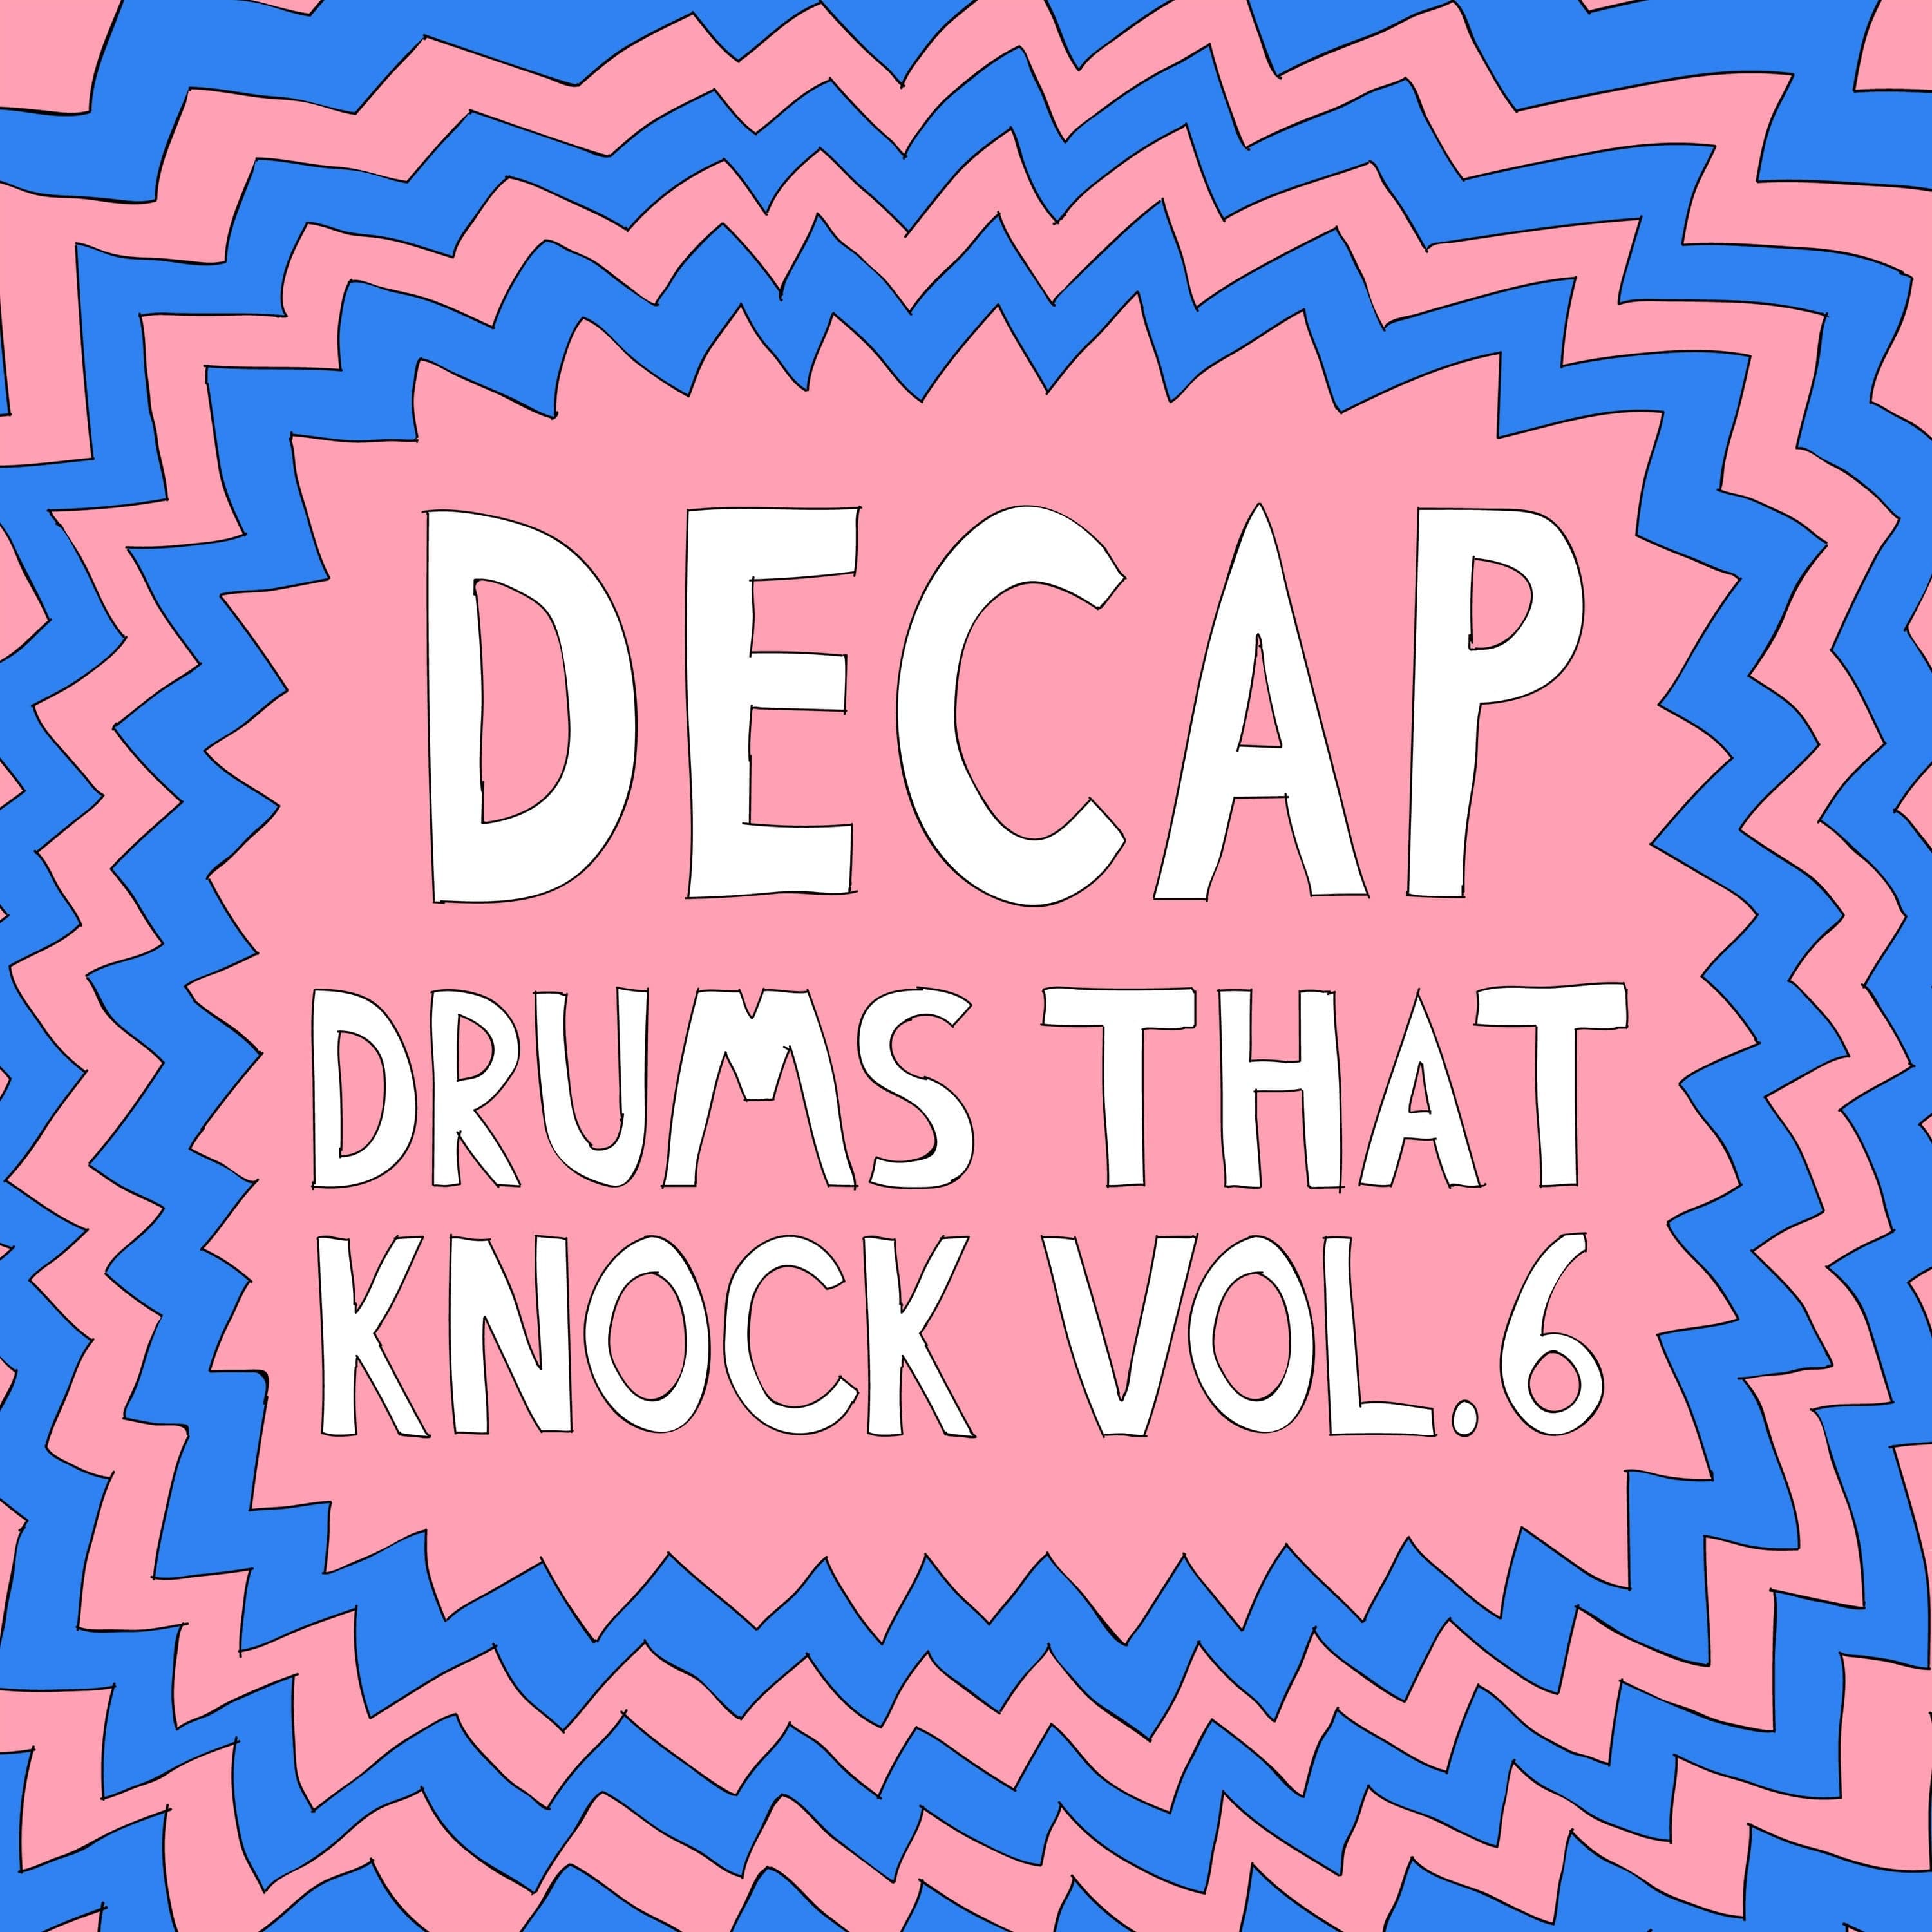 Drums That Knock Vol. 6